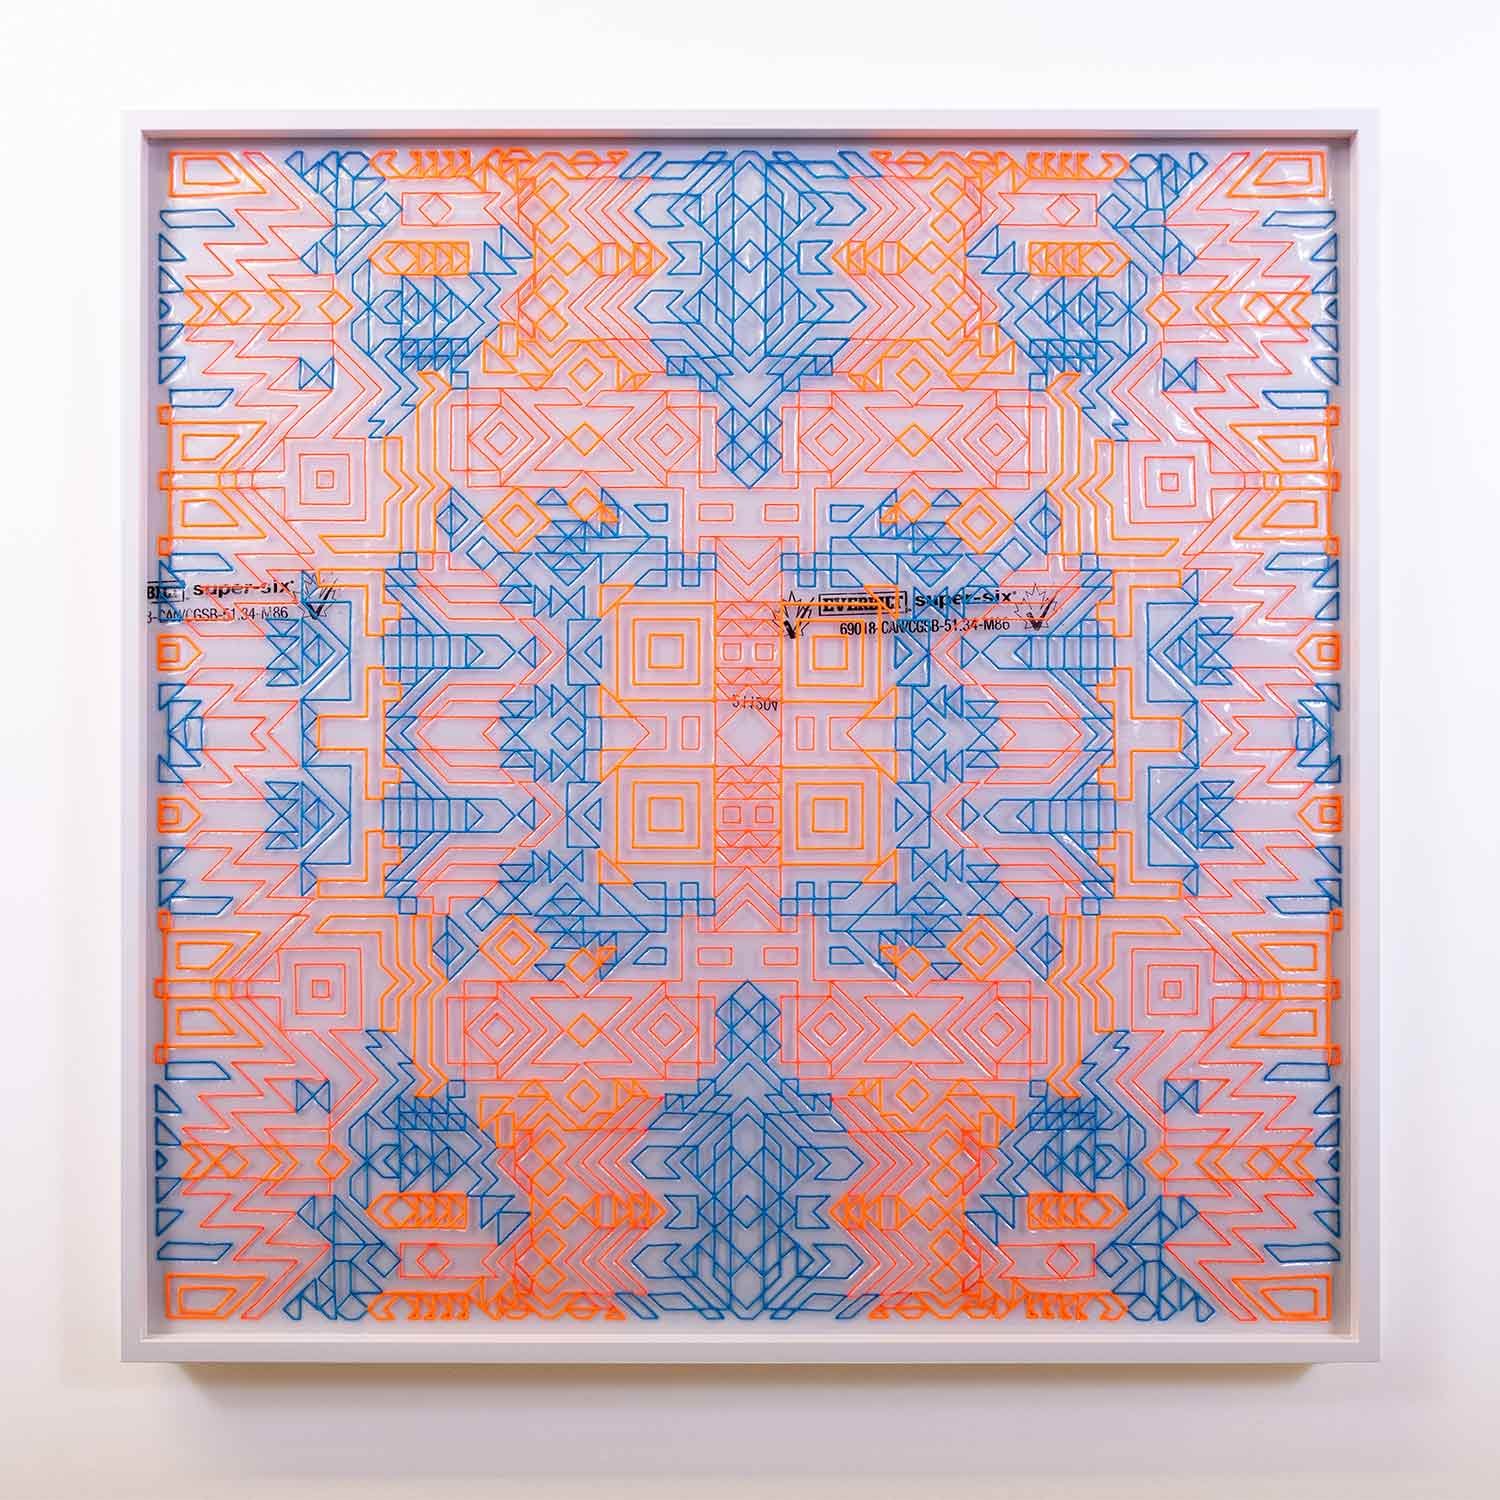 Caroline Monnet, Ossature 02, 2022, Embroidery on polyethylene, 36 x 36 in.